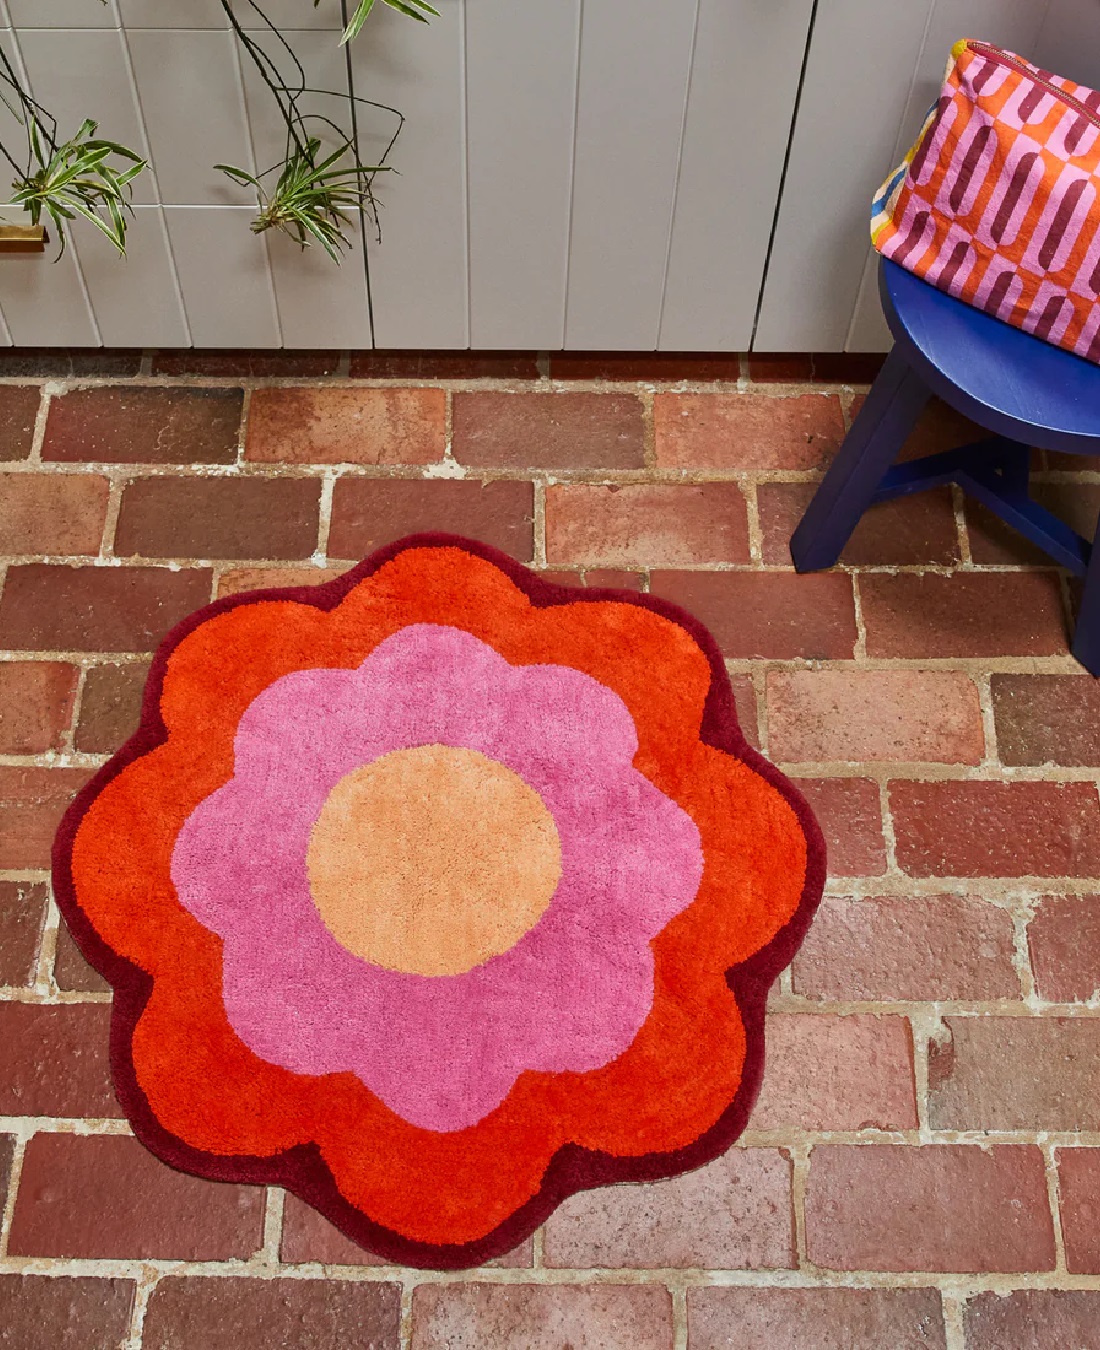 Orange, pink and yellow flower bath mat on brick floor